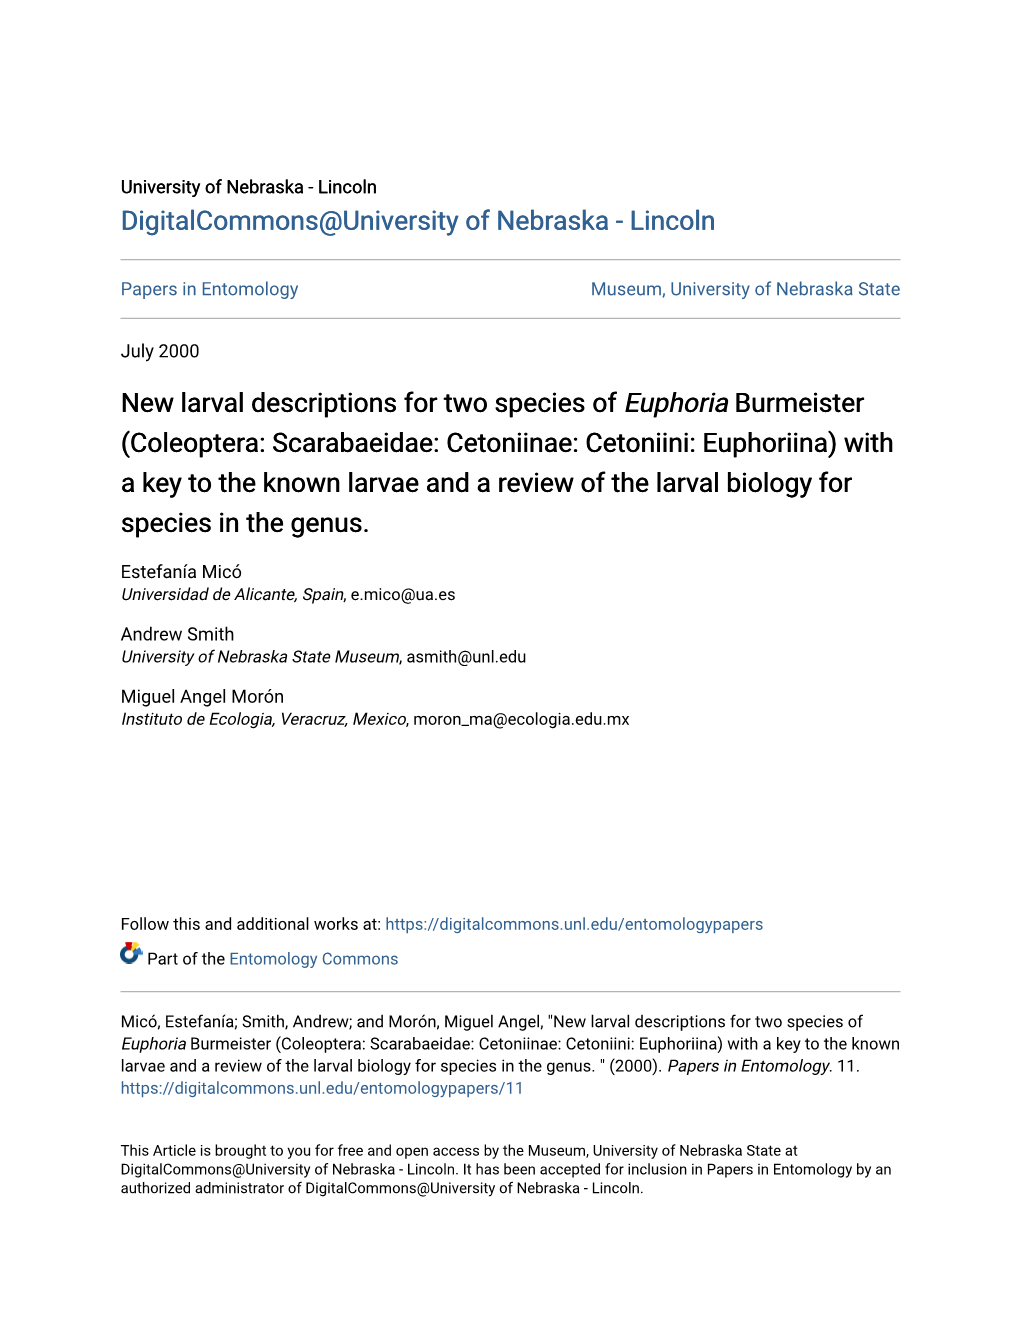 New Larval Descriptions for Two Species of &lt;I&gt;Euphoria&lt;/I&gt; Burmeister